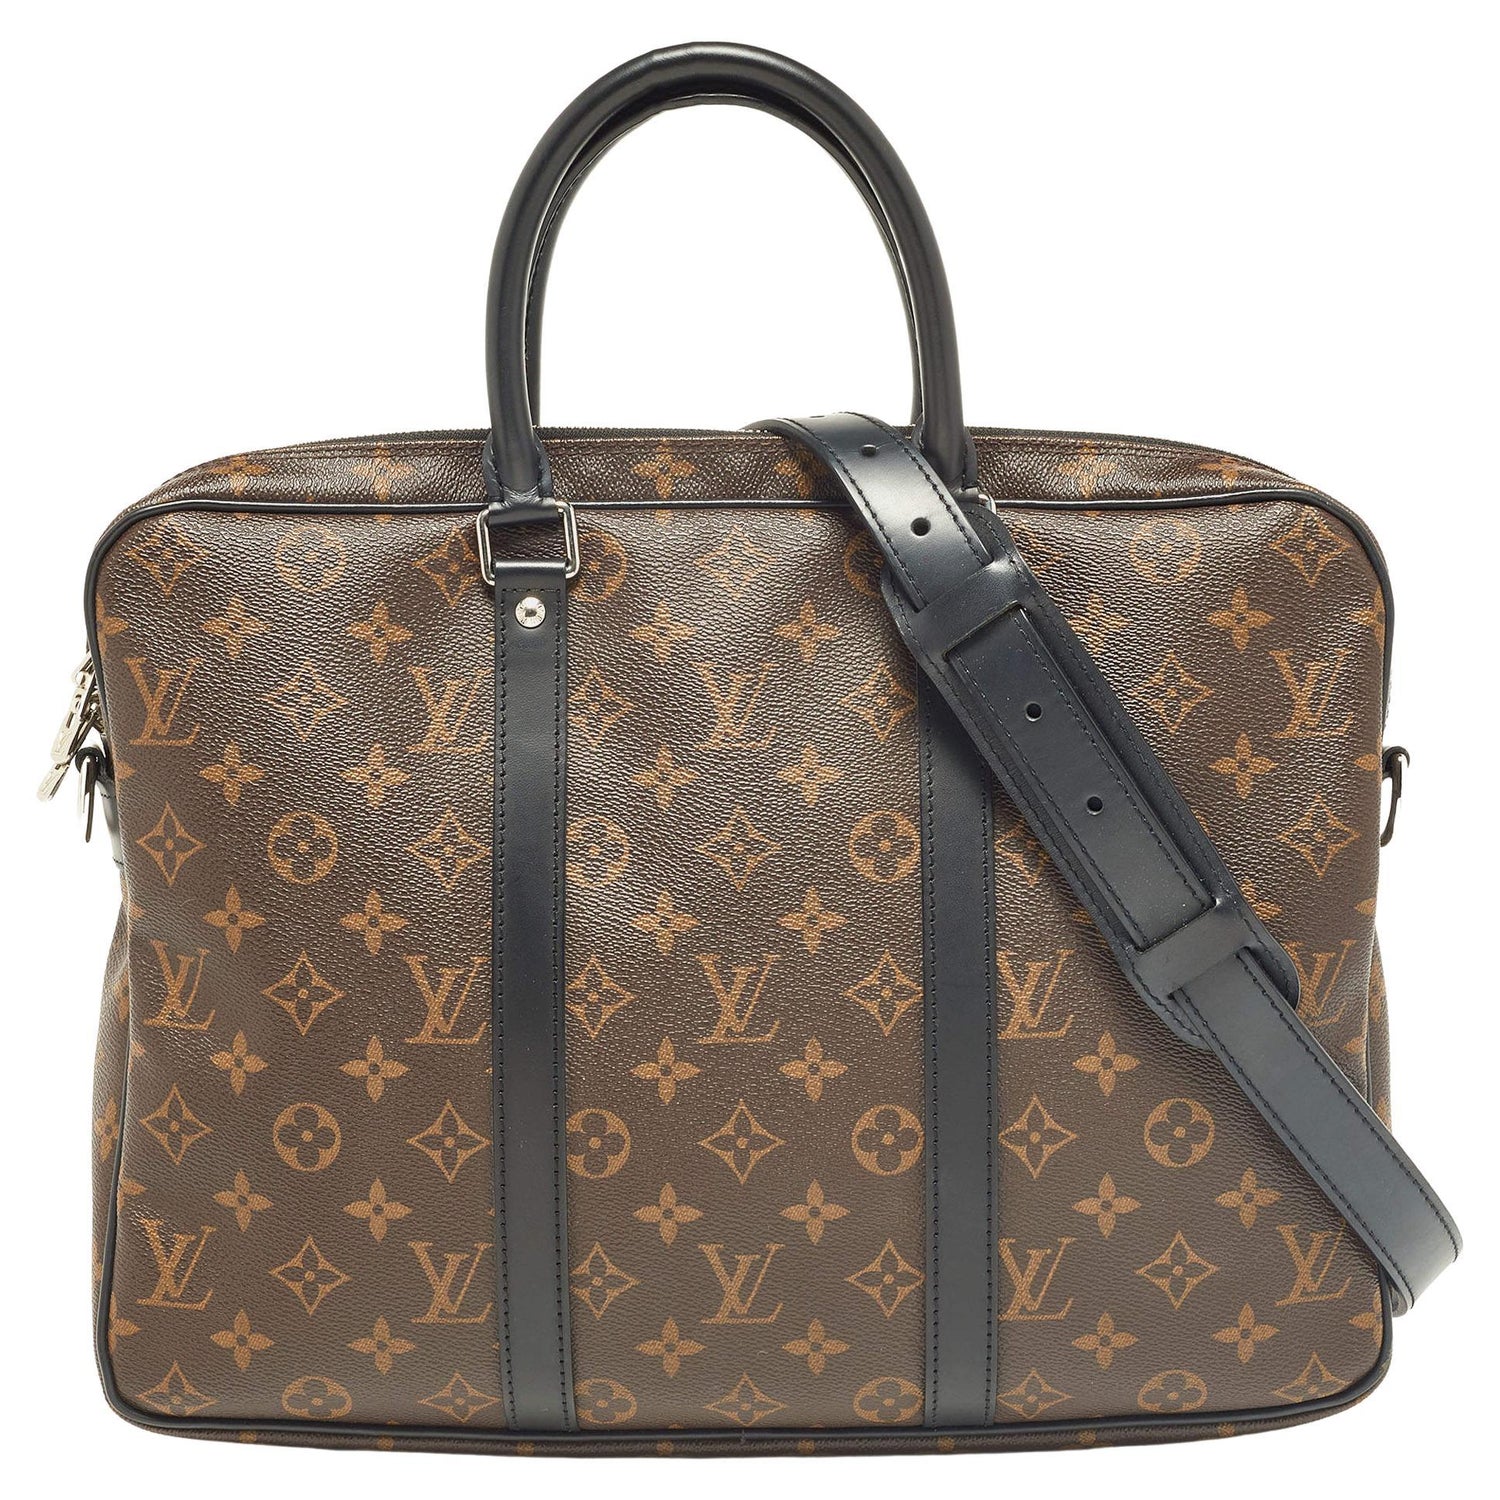 QC Louis Vuitton Porte-Documents Voyage PM Bag (REAL LEATHER, TOP